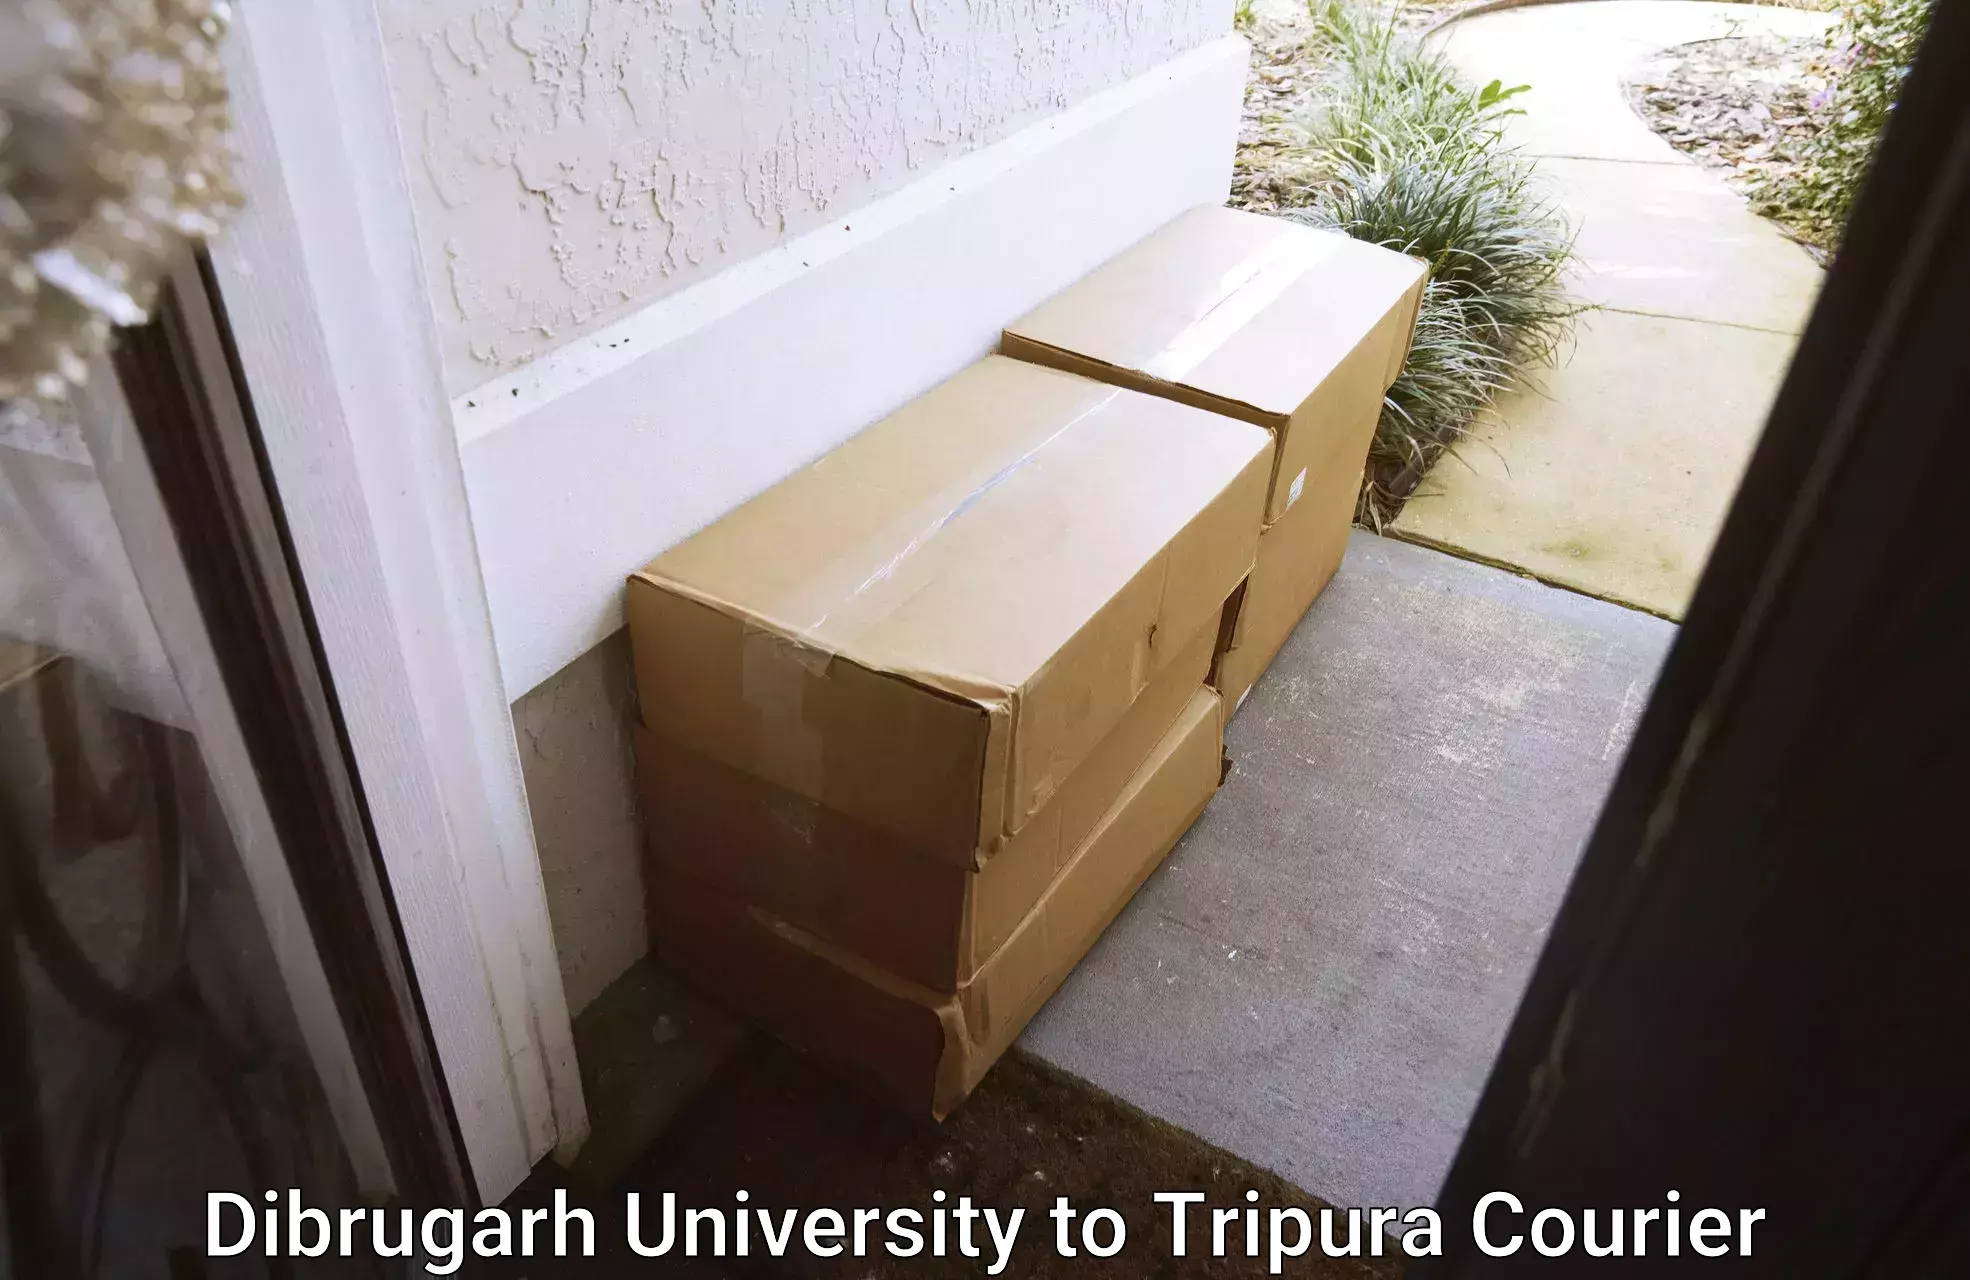 Express logistics providers Dibrugarh University to Udaipur Tripura